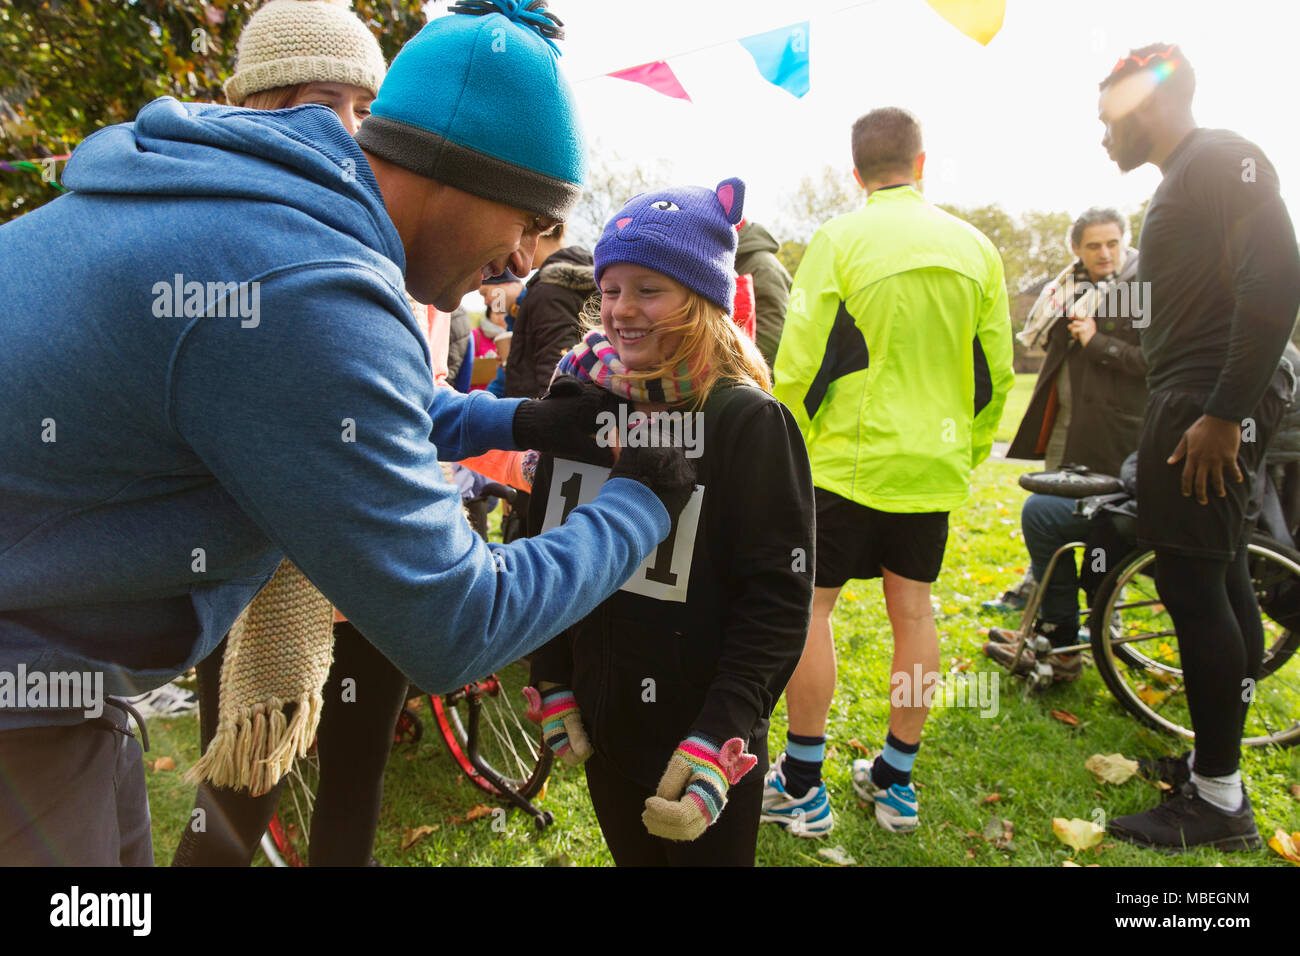 Father pinning marathon bib on daughter at charity run in park Stock Photo